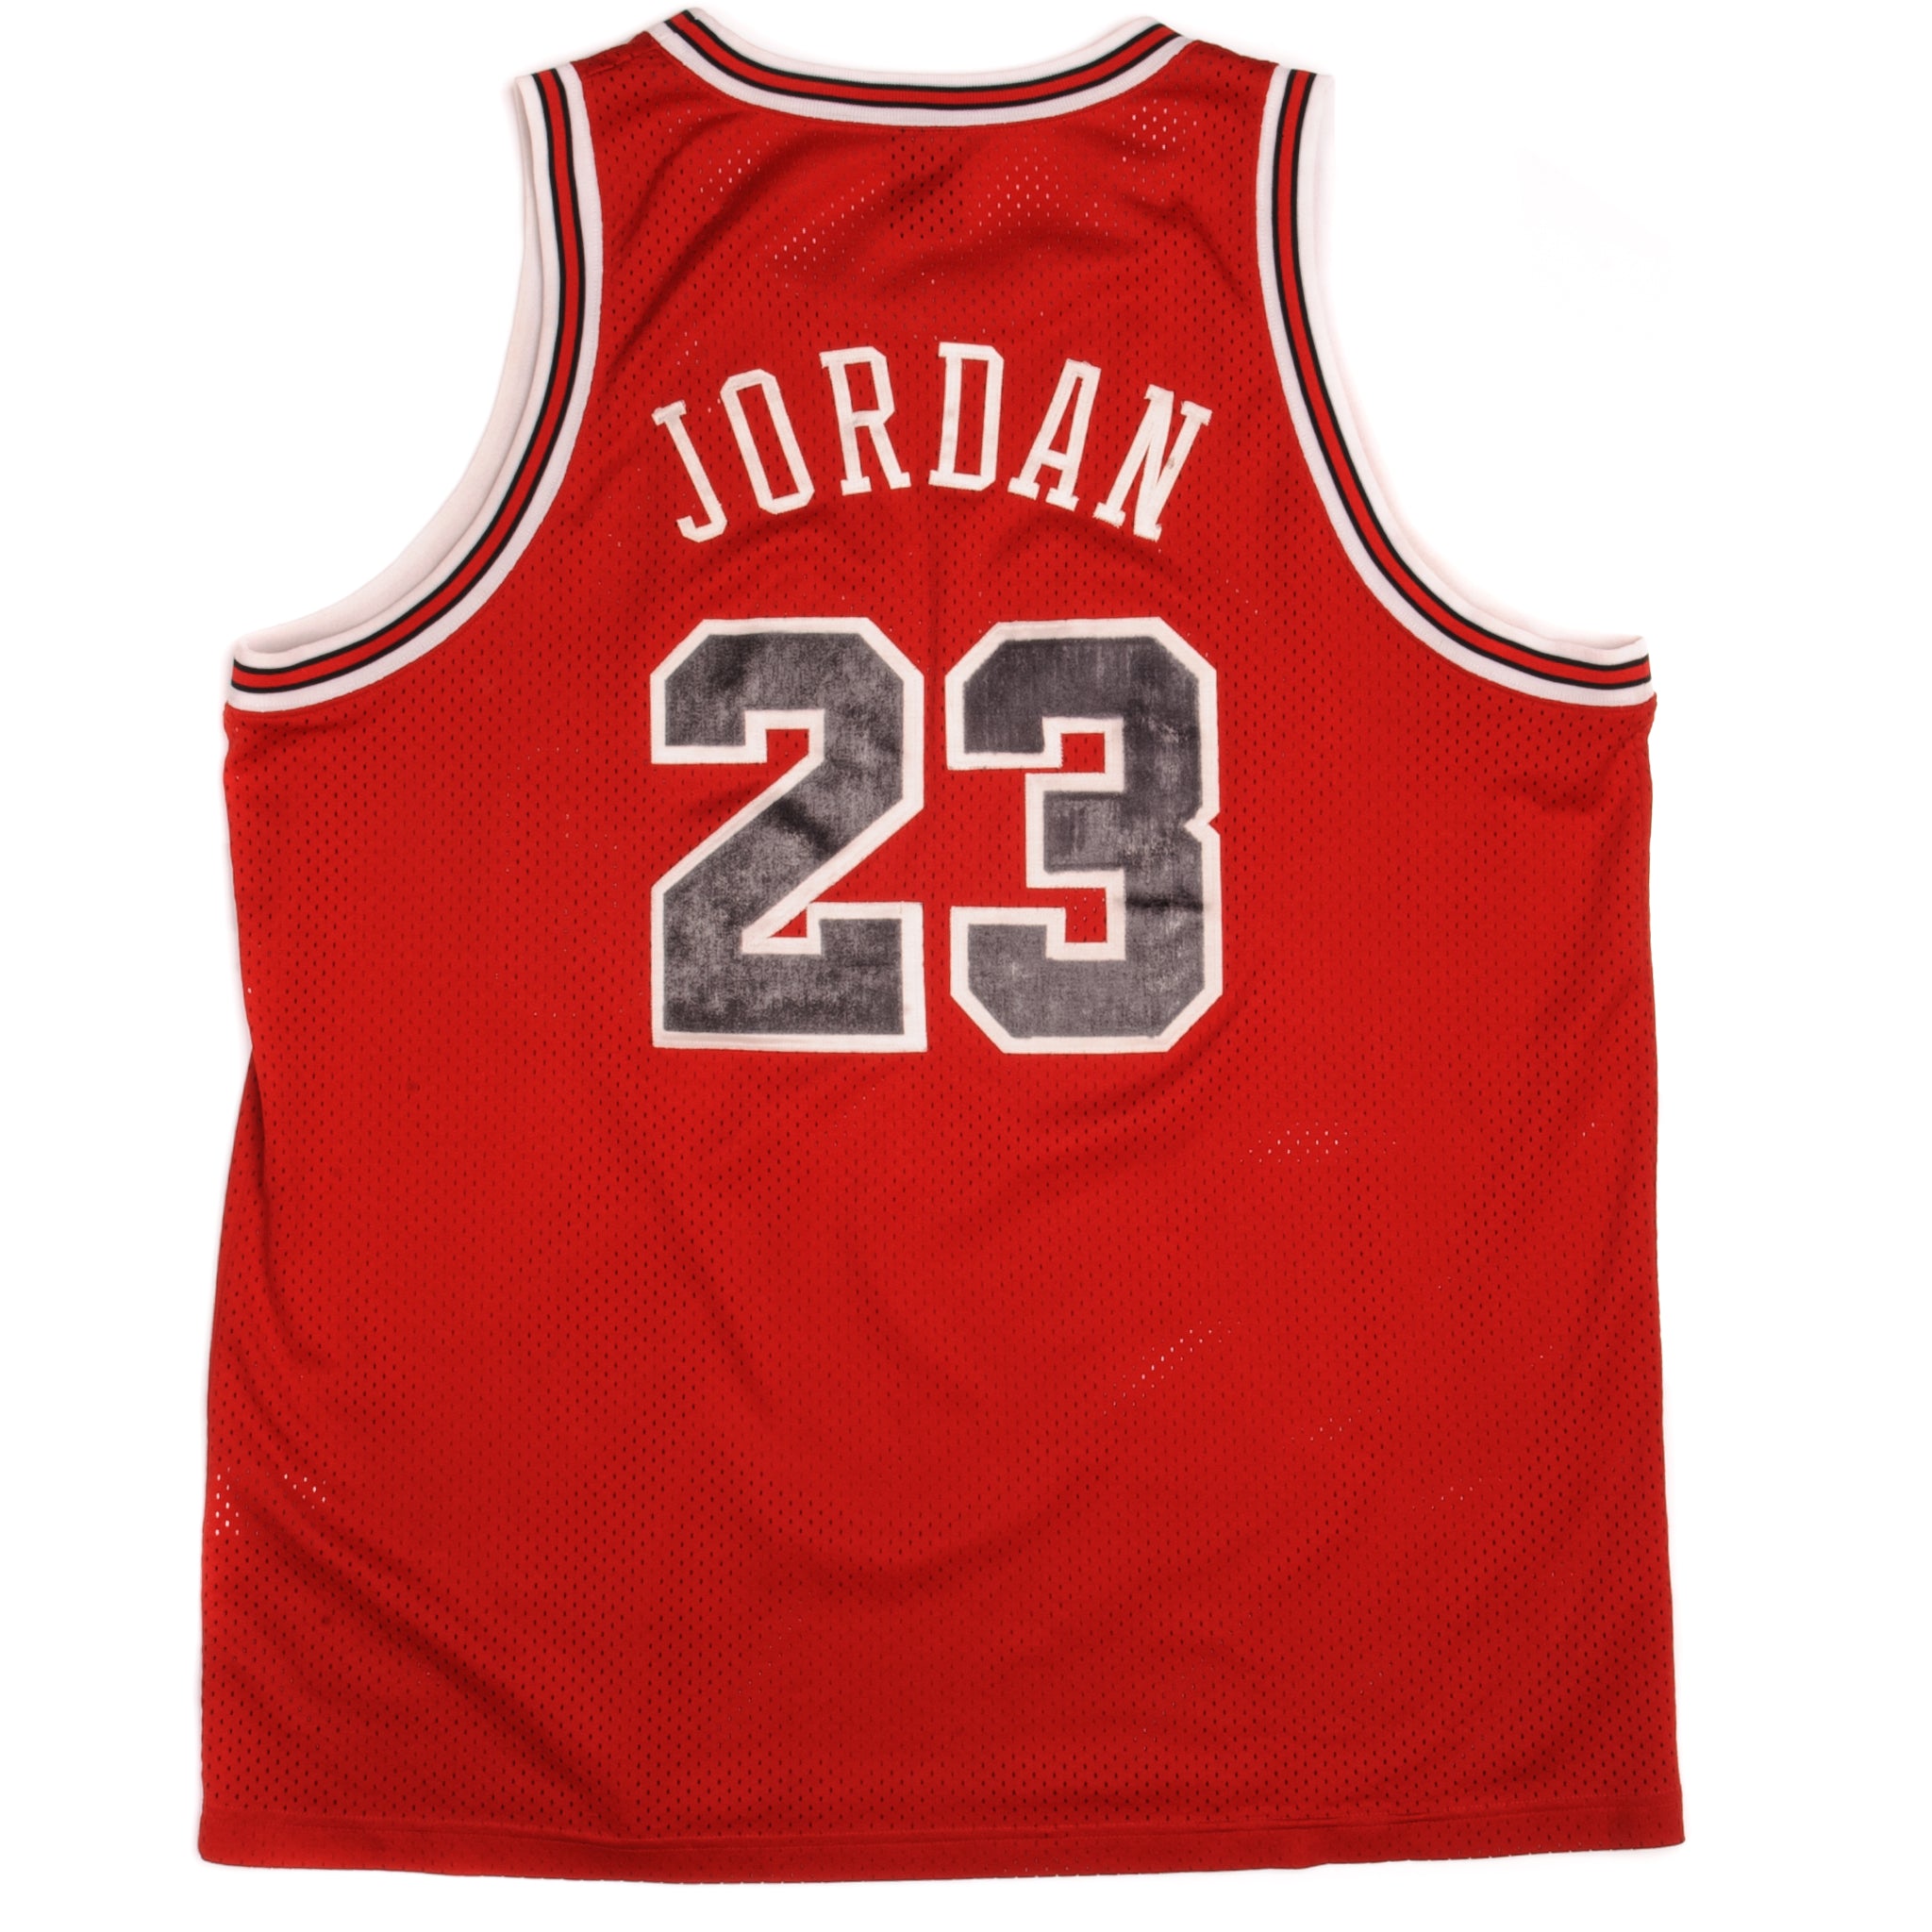 Jordan Men's Basketball Jersey Sleeveless Size XXL 2XL Embroidered Black  Gray